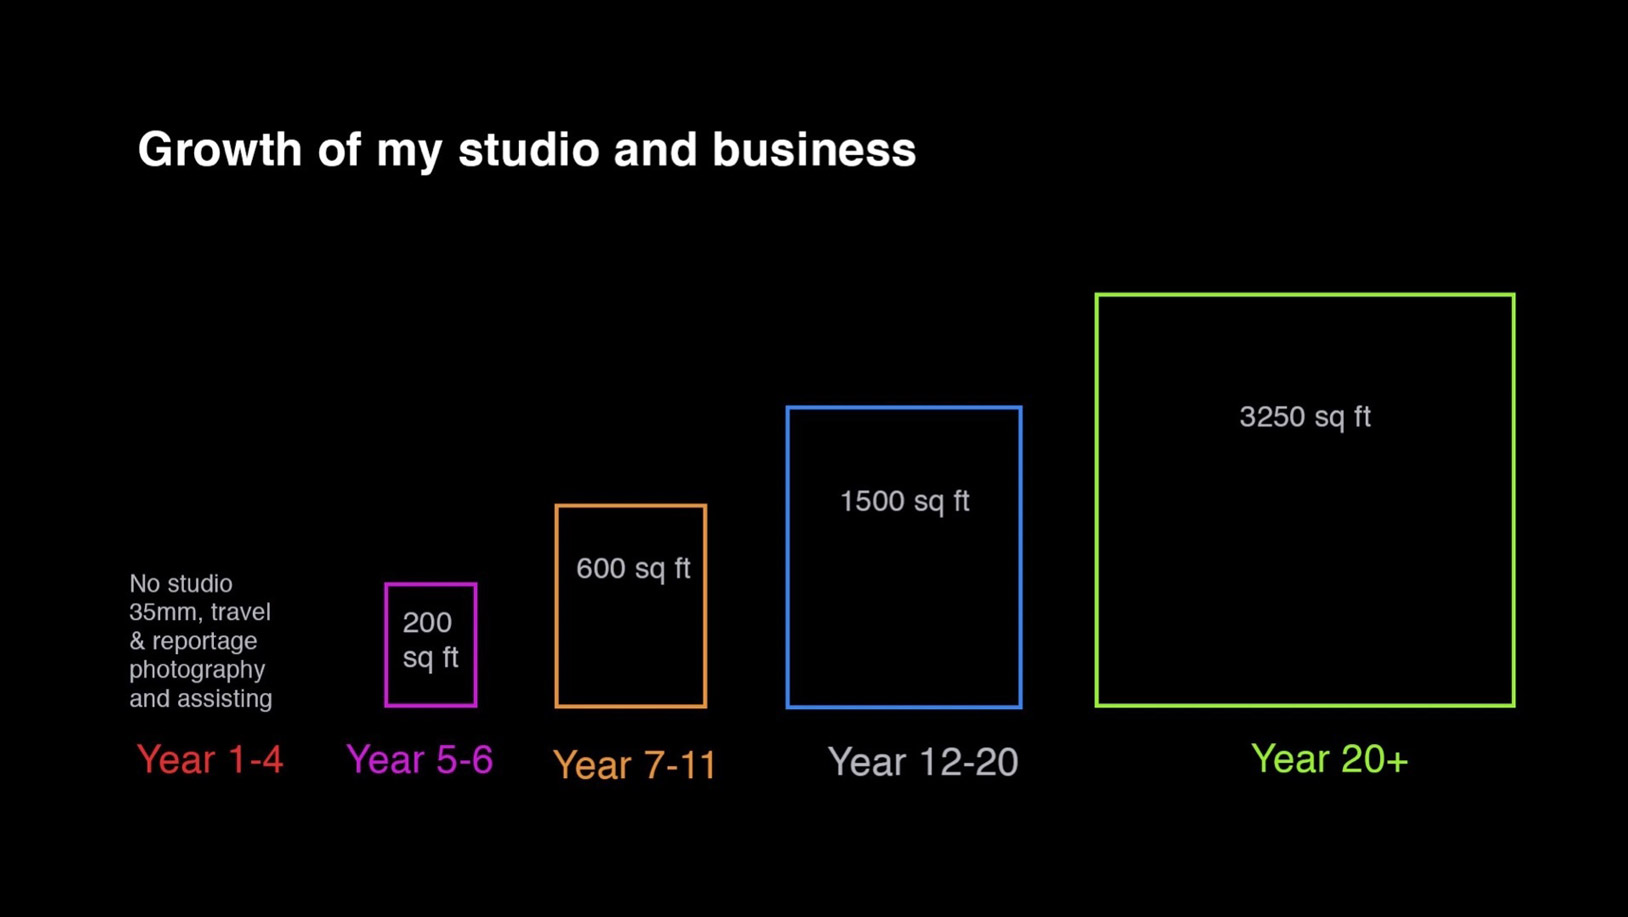 Progression of Karl's studio size over 20 years